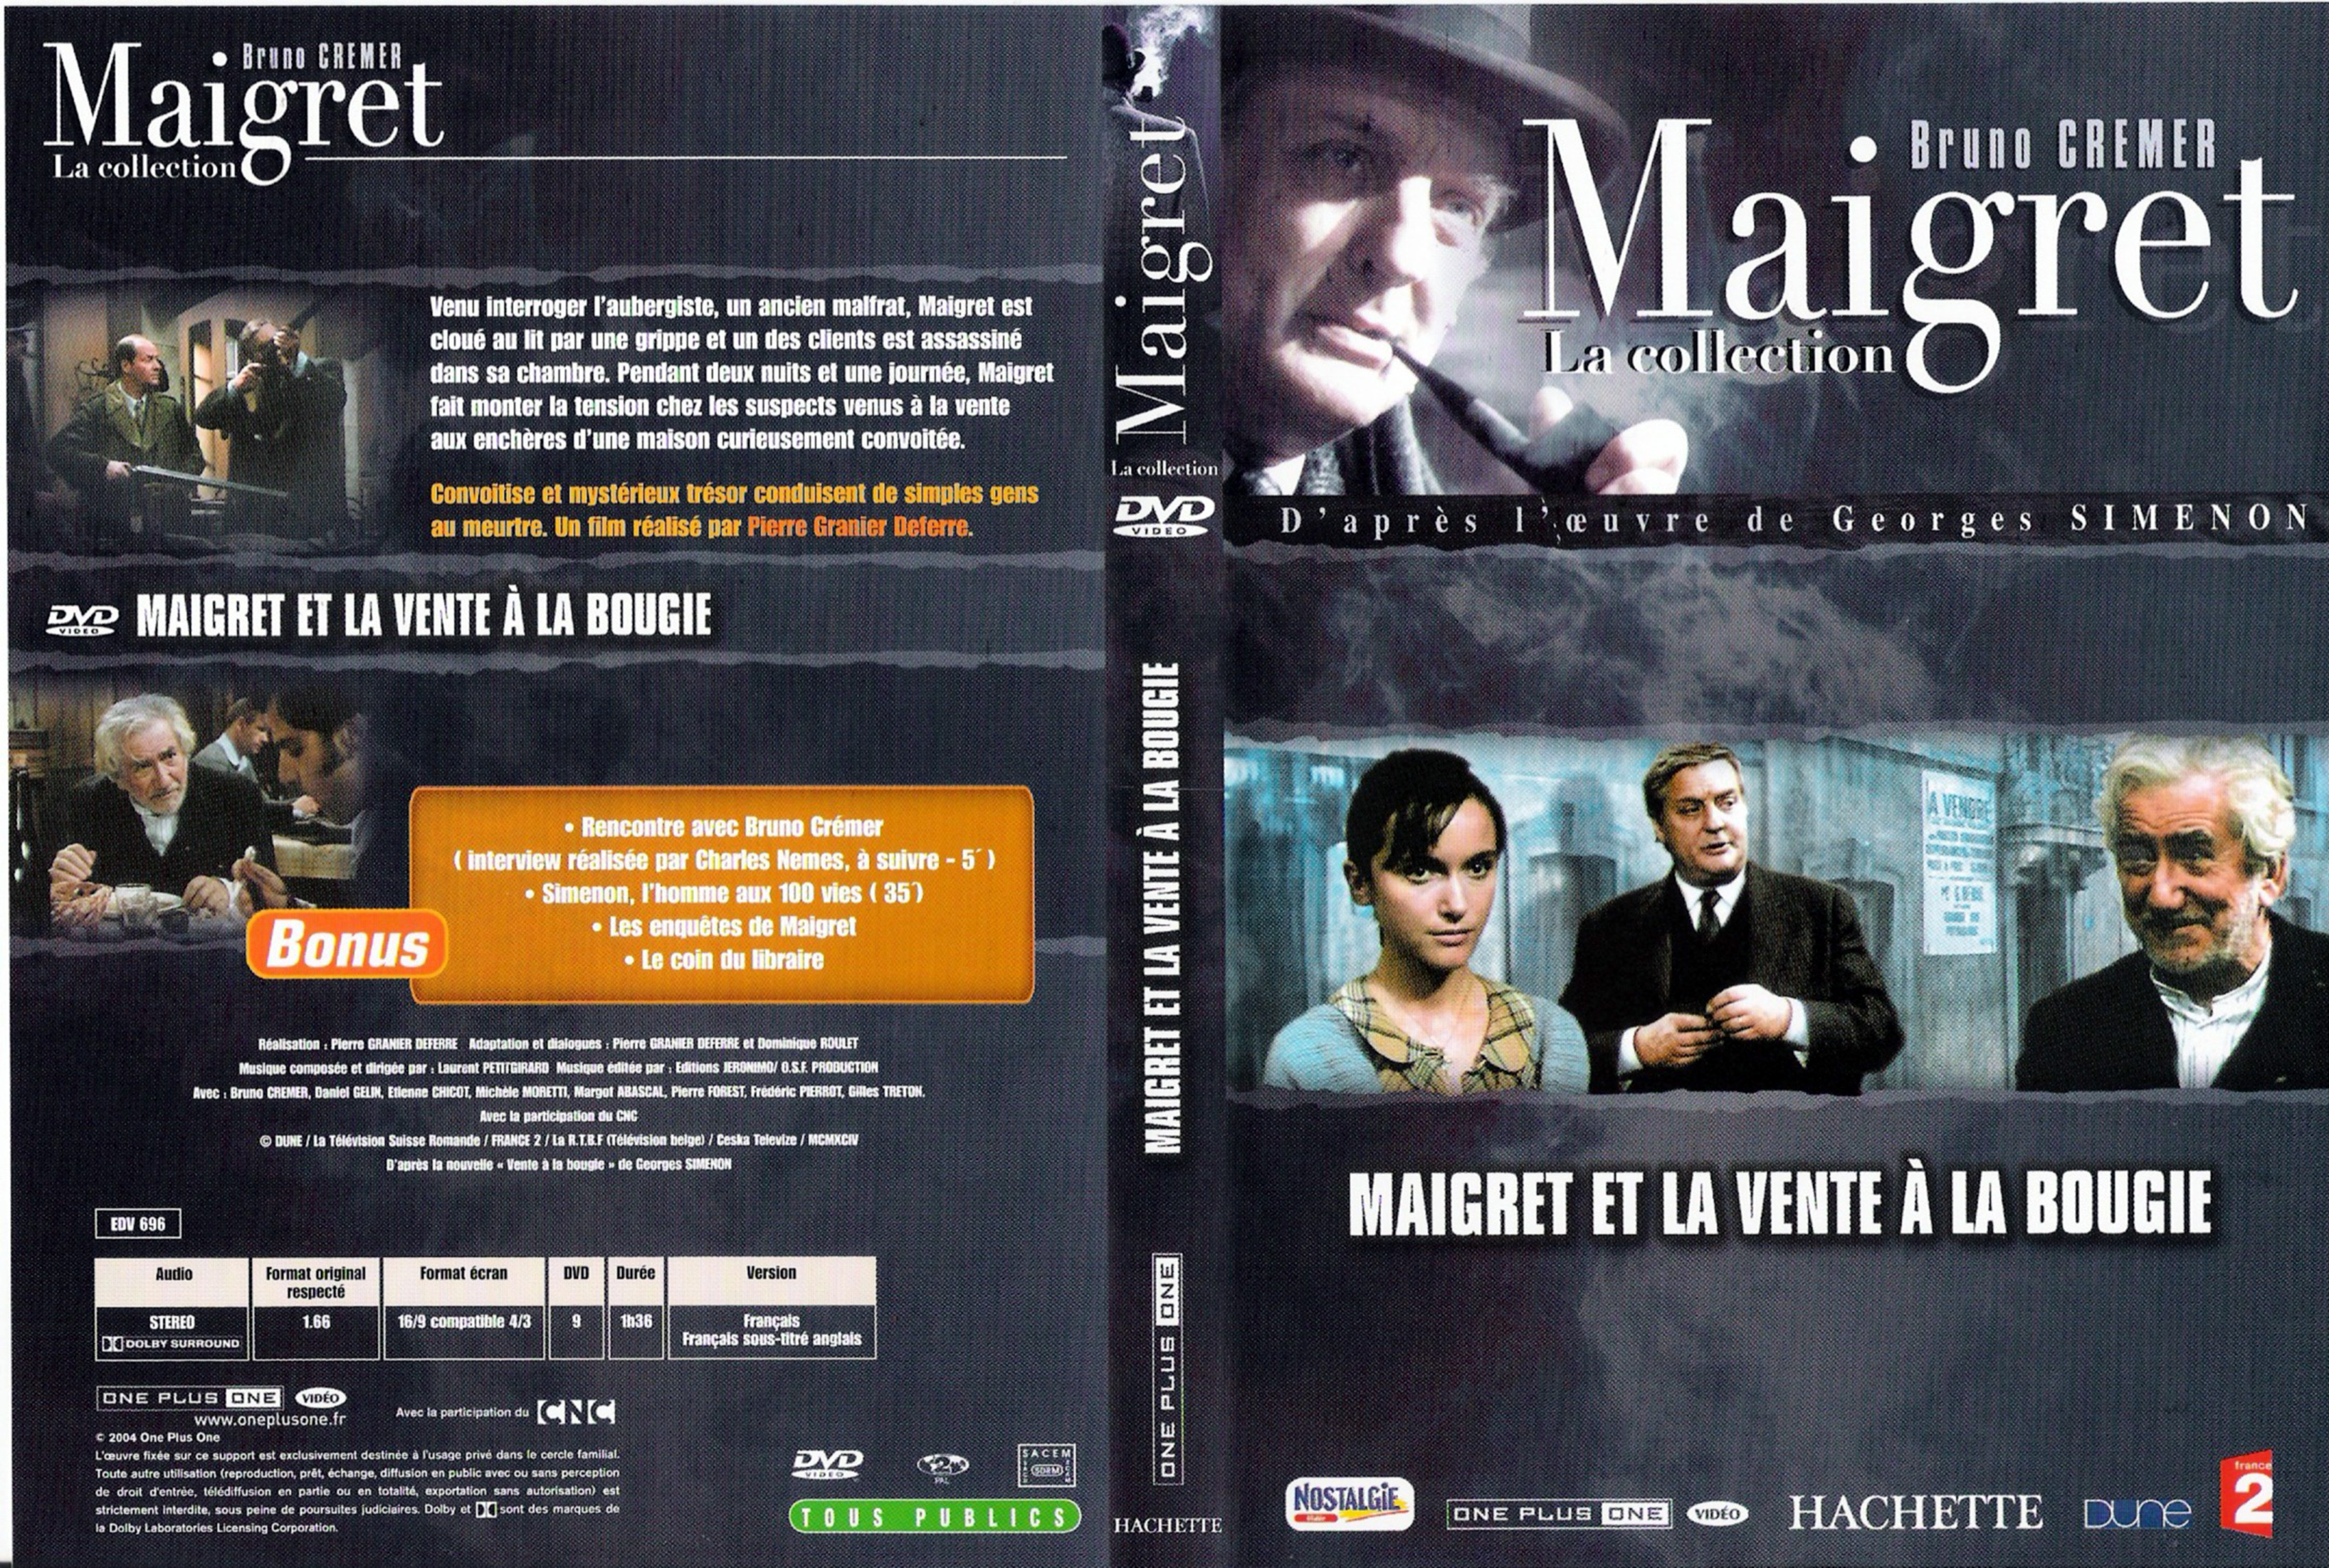 Jaquette DVD Maigret et la vente a la bougie (Bruno Cremer)